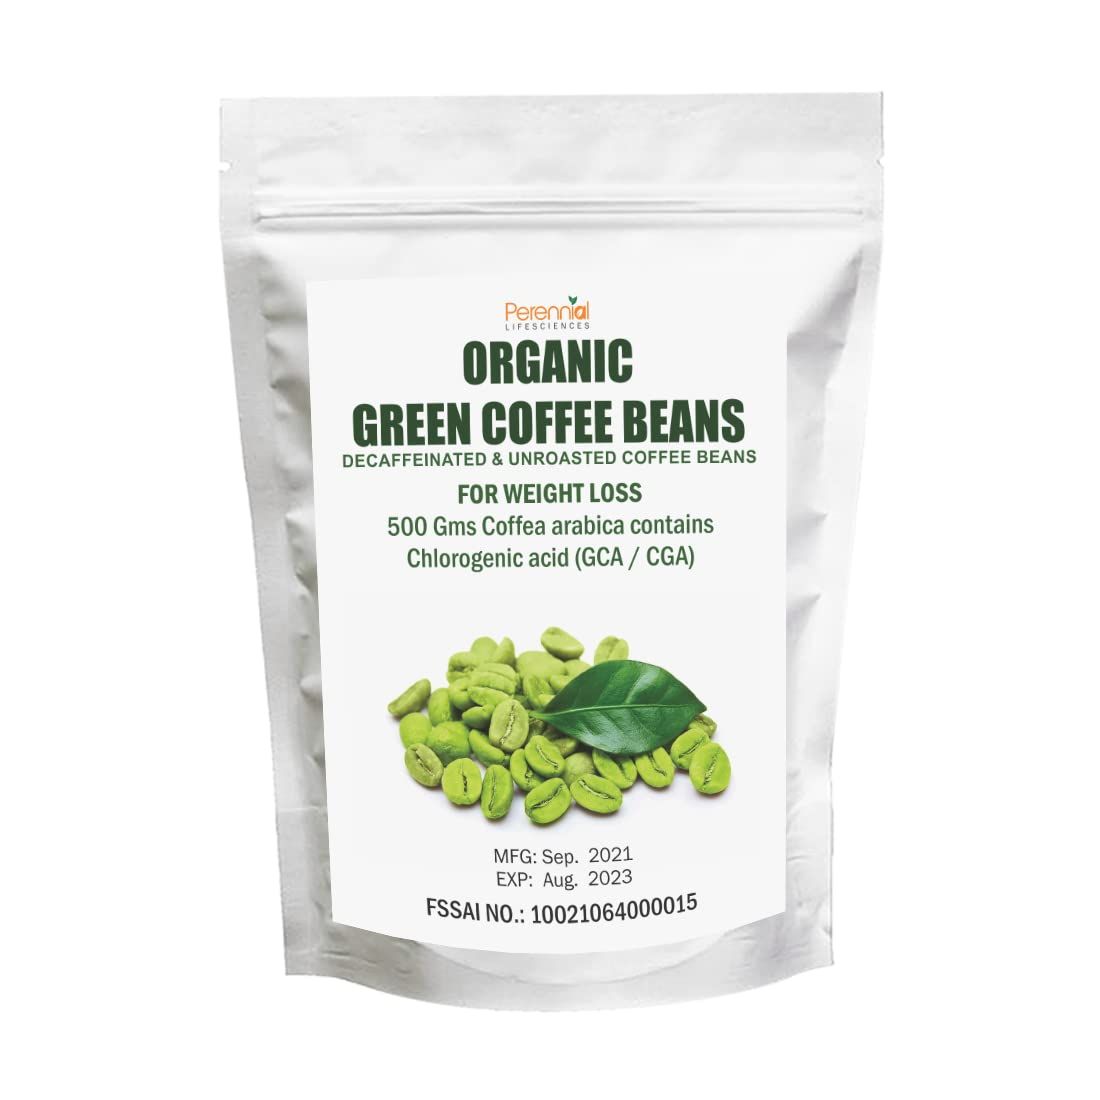 Perennial Lifesciences Organic Green Coffee Beans Image